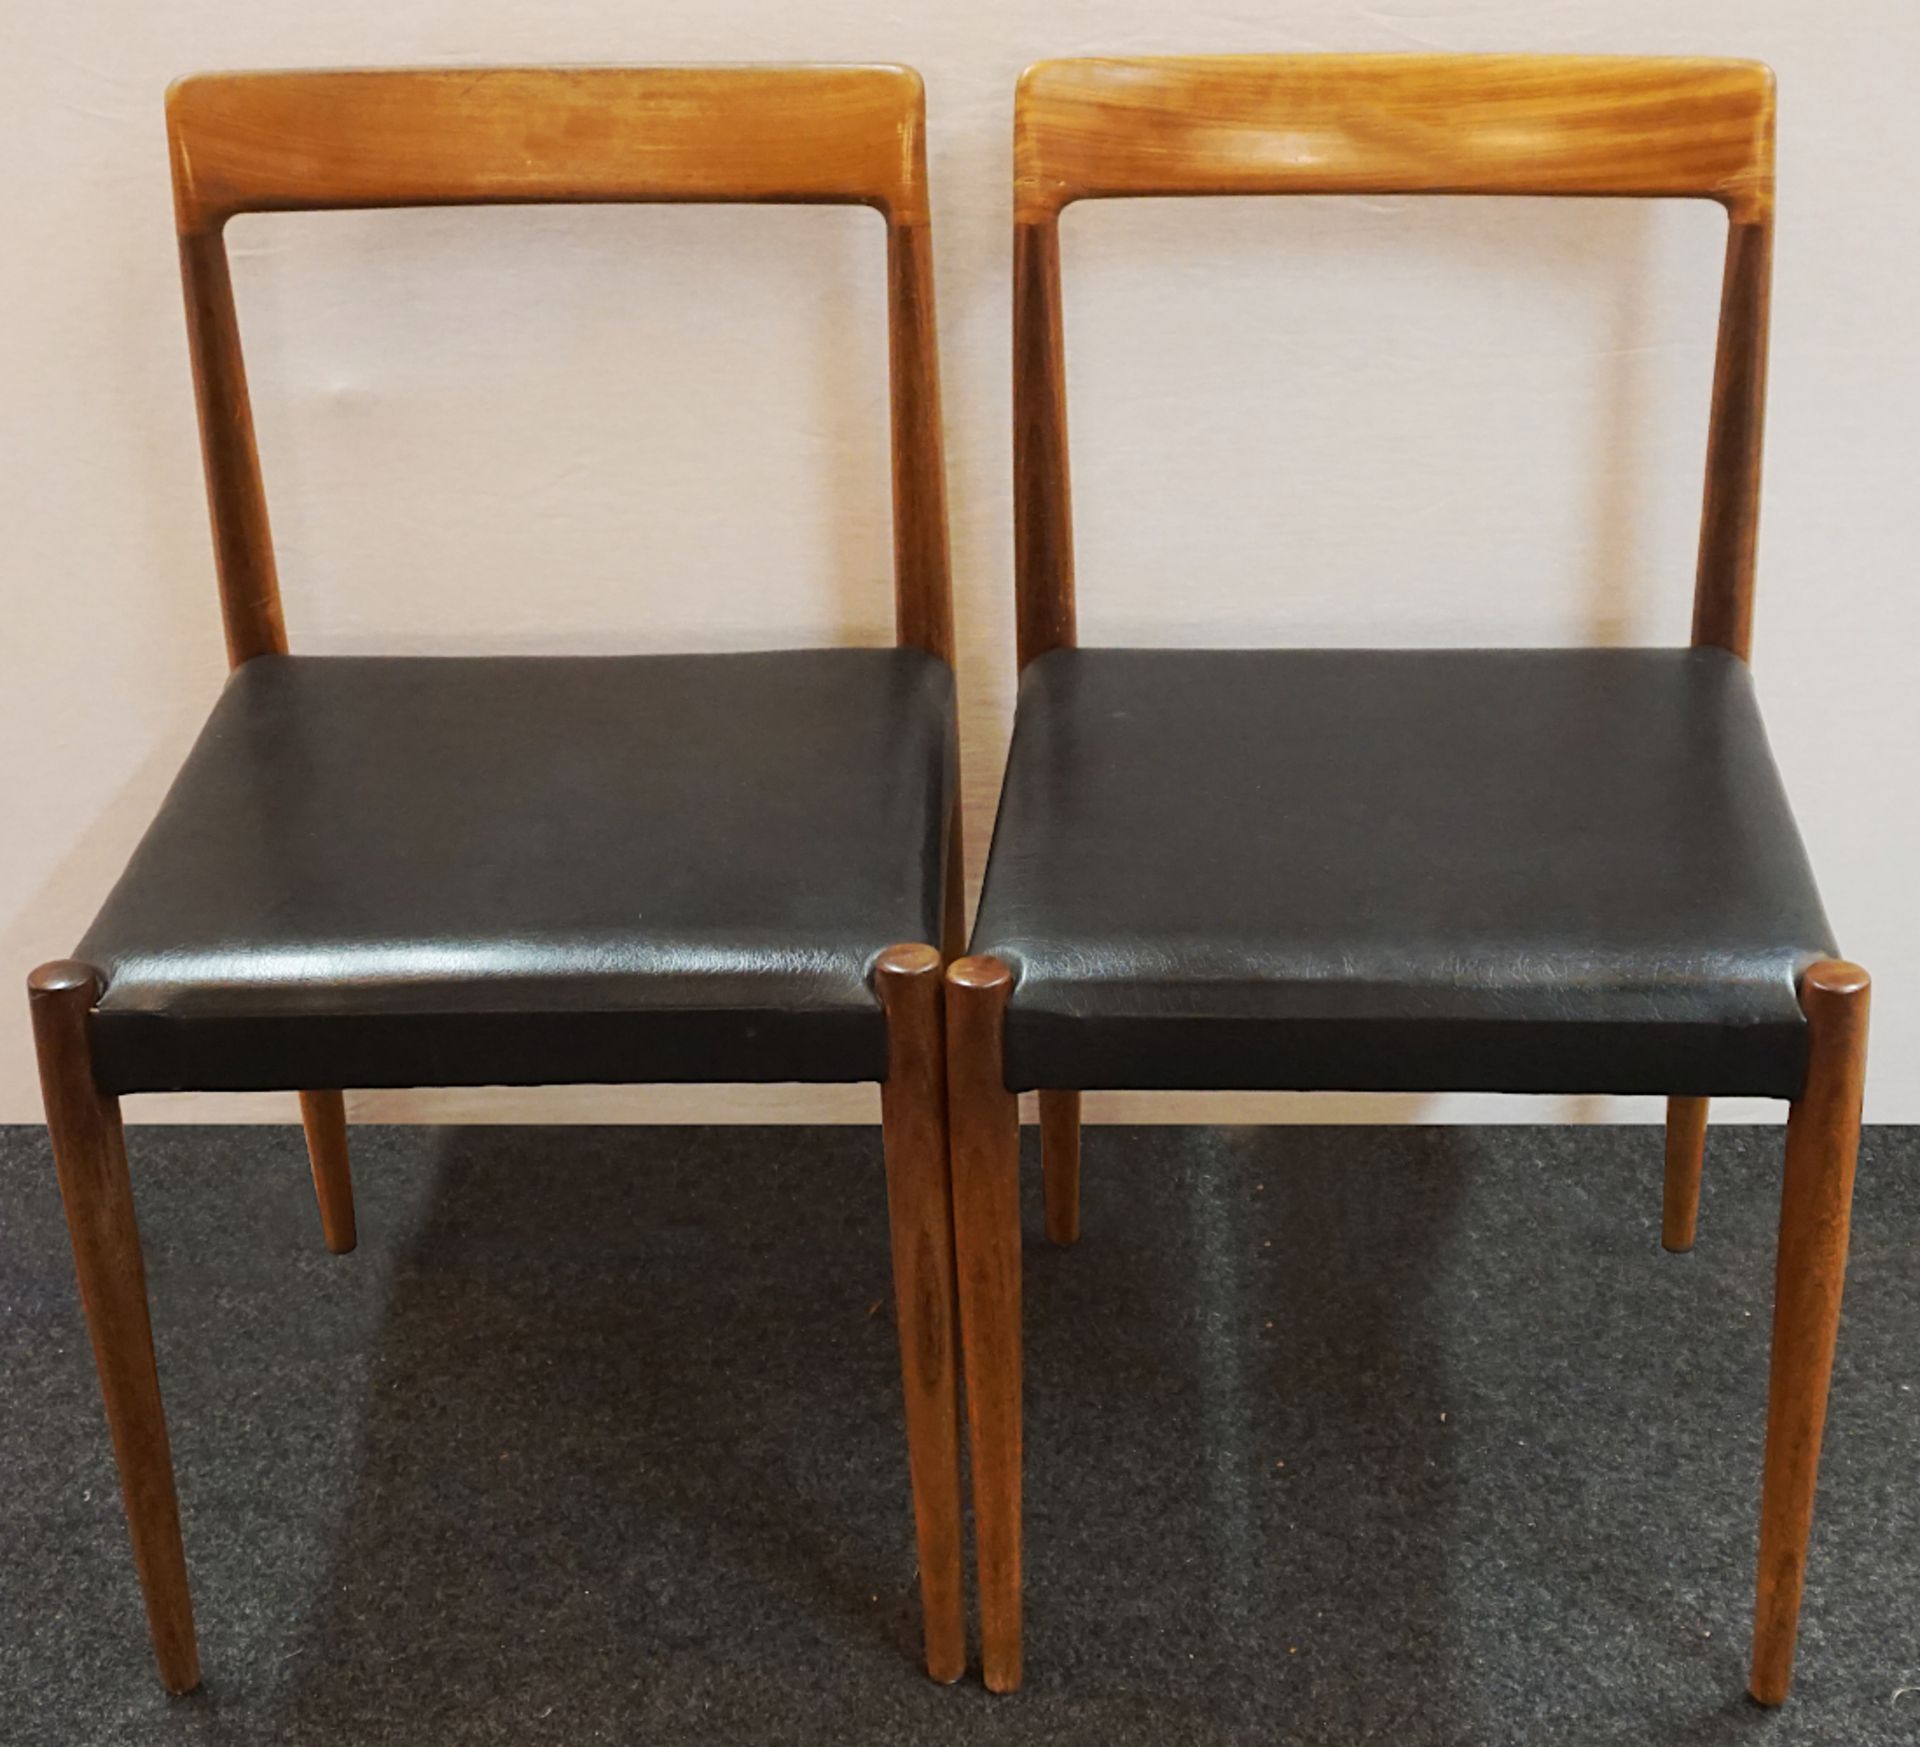 2 Stühle wohl LÜBKE 1960er Jahre je mit Lederbezug, je H ca. 78cm